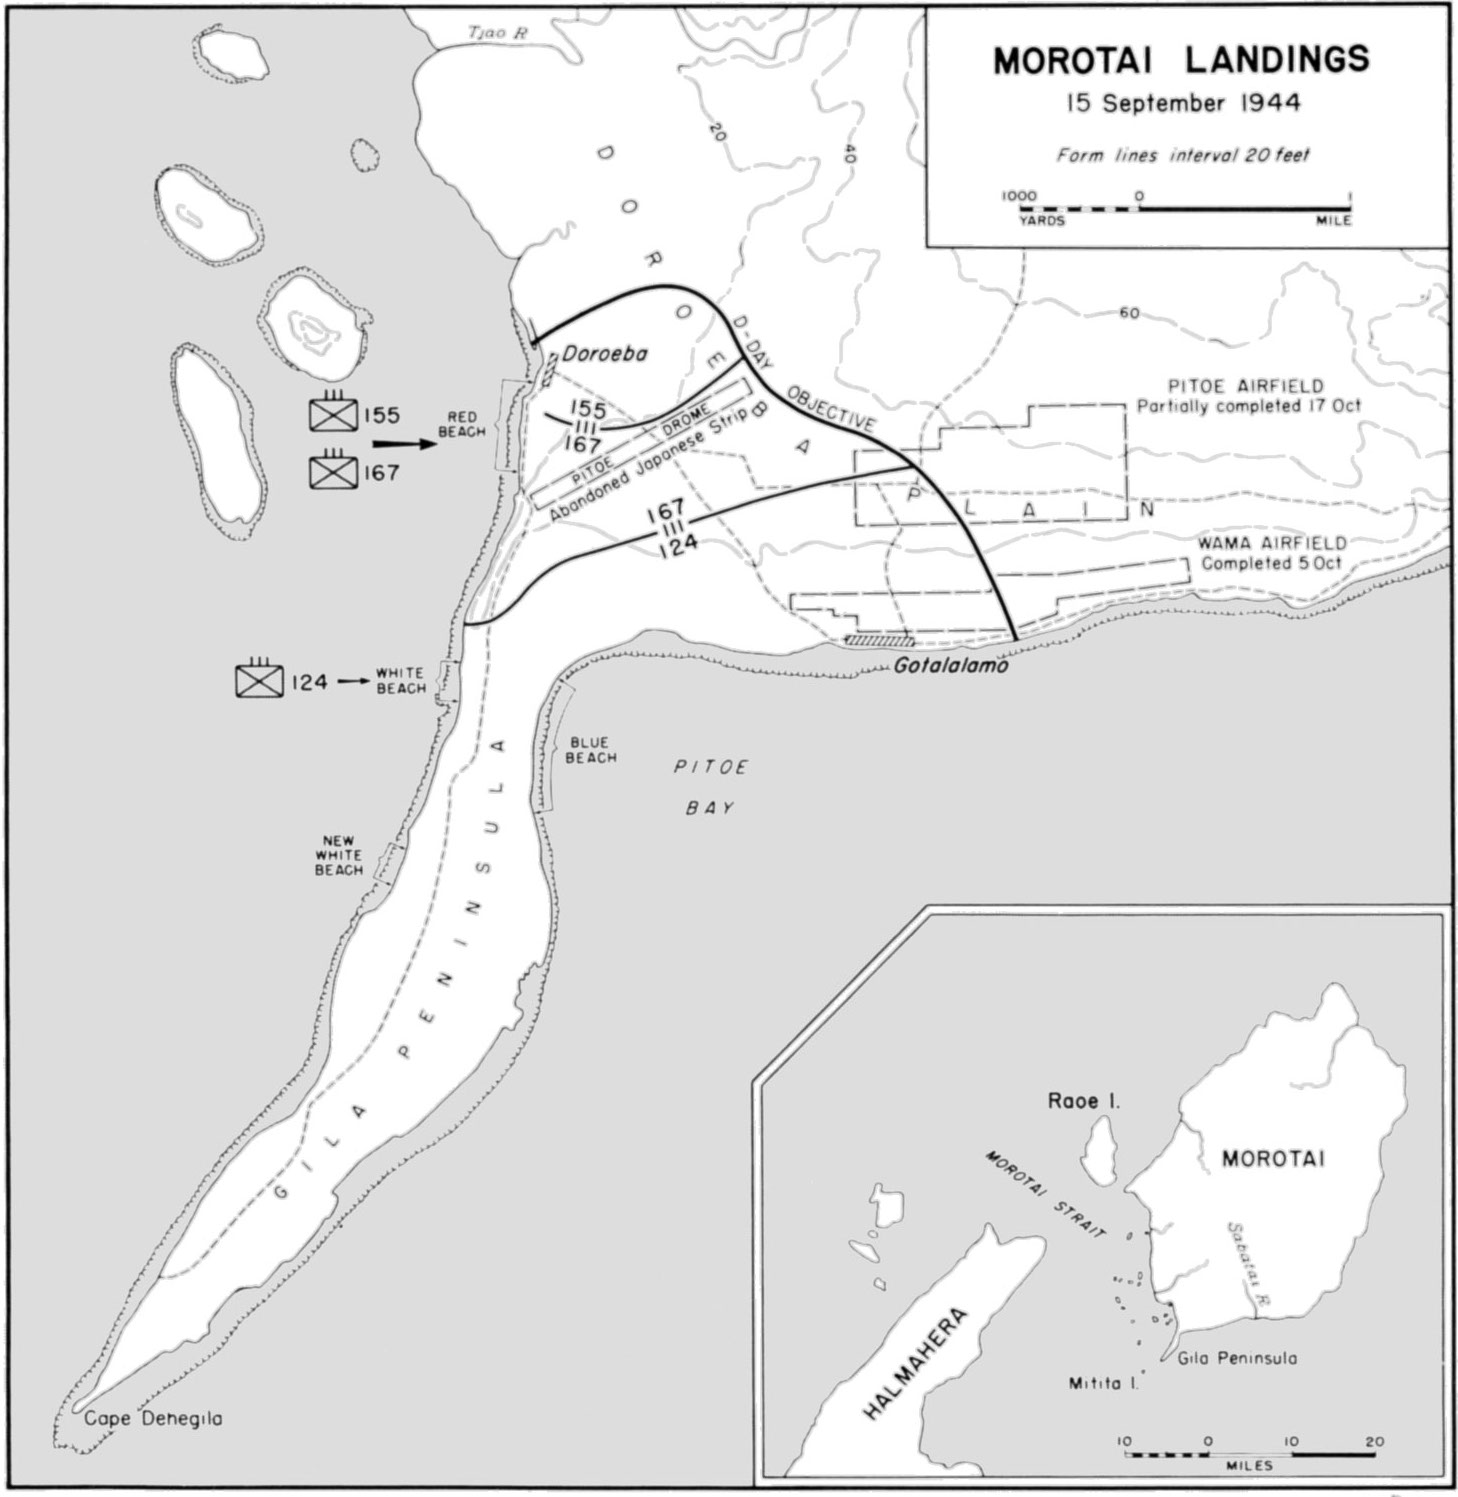 Map showing the Morotai landings on 15 Sep 1944